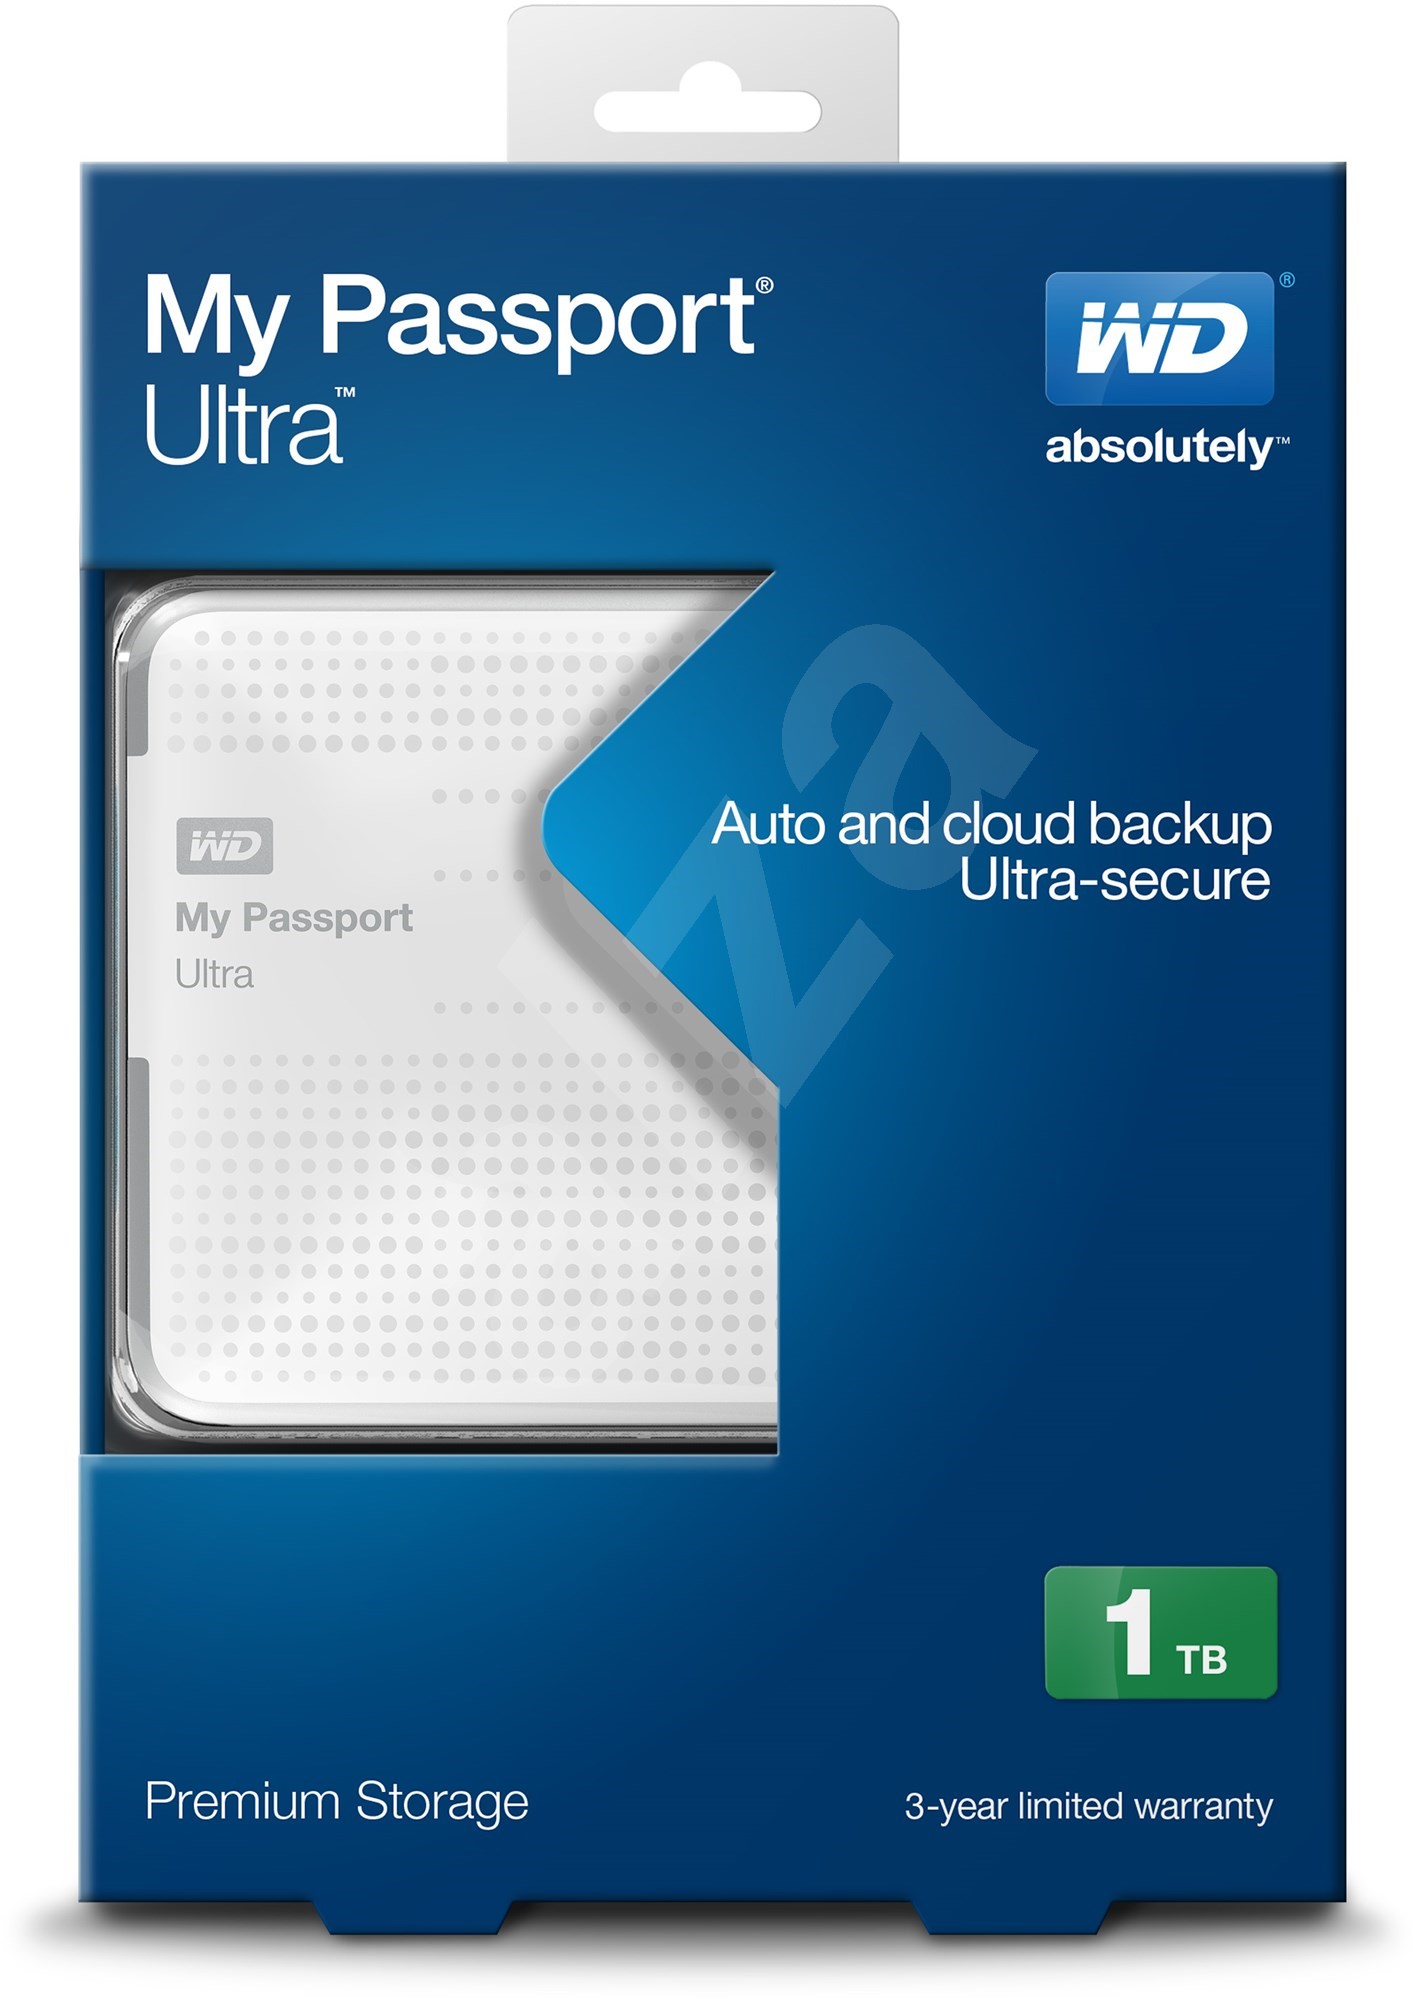 wd my passport for mac manual